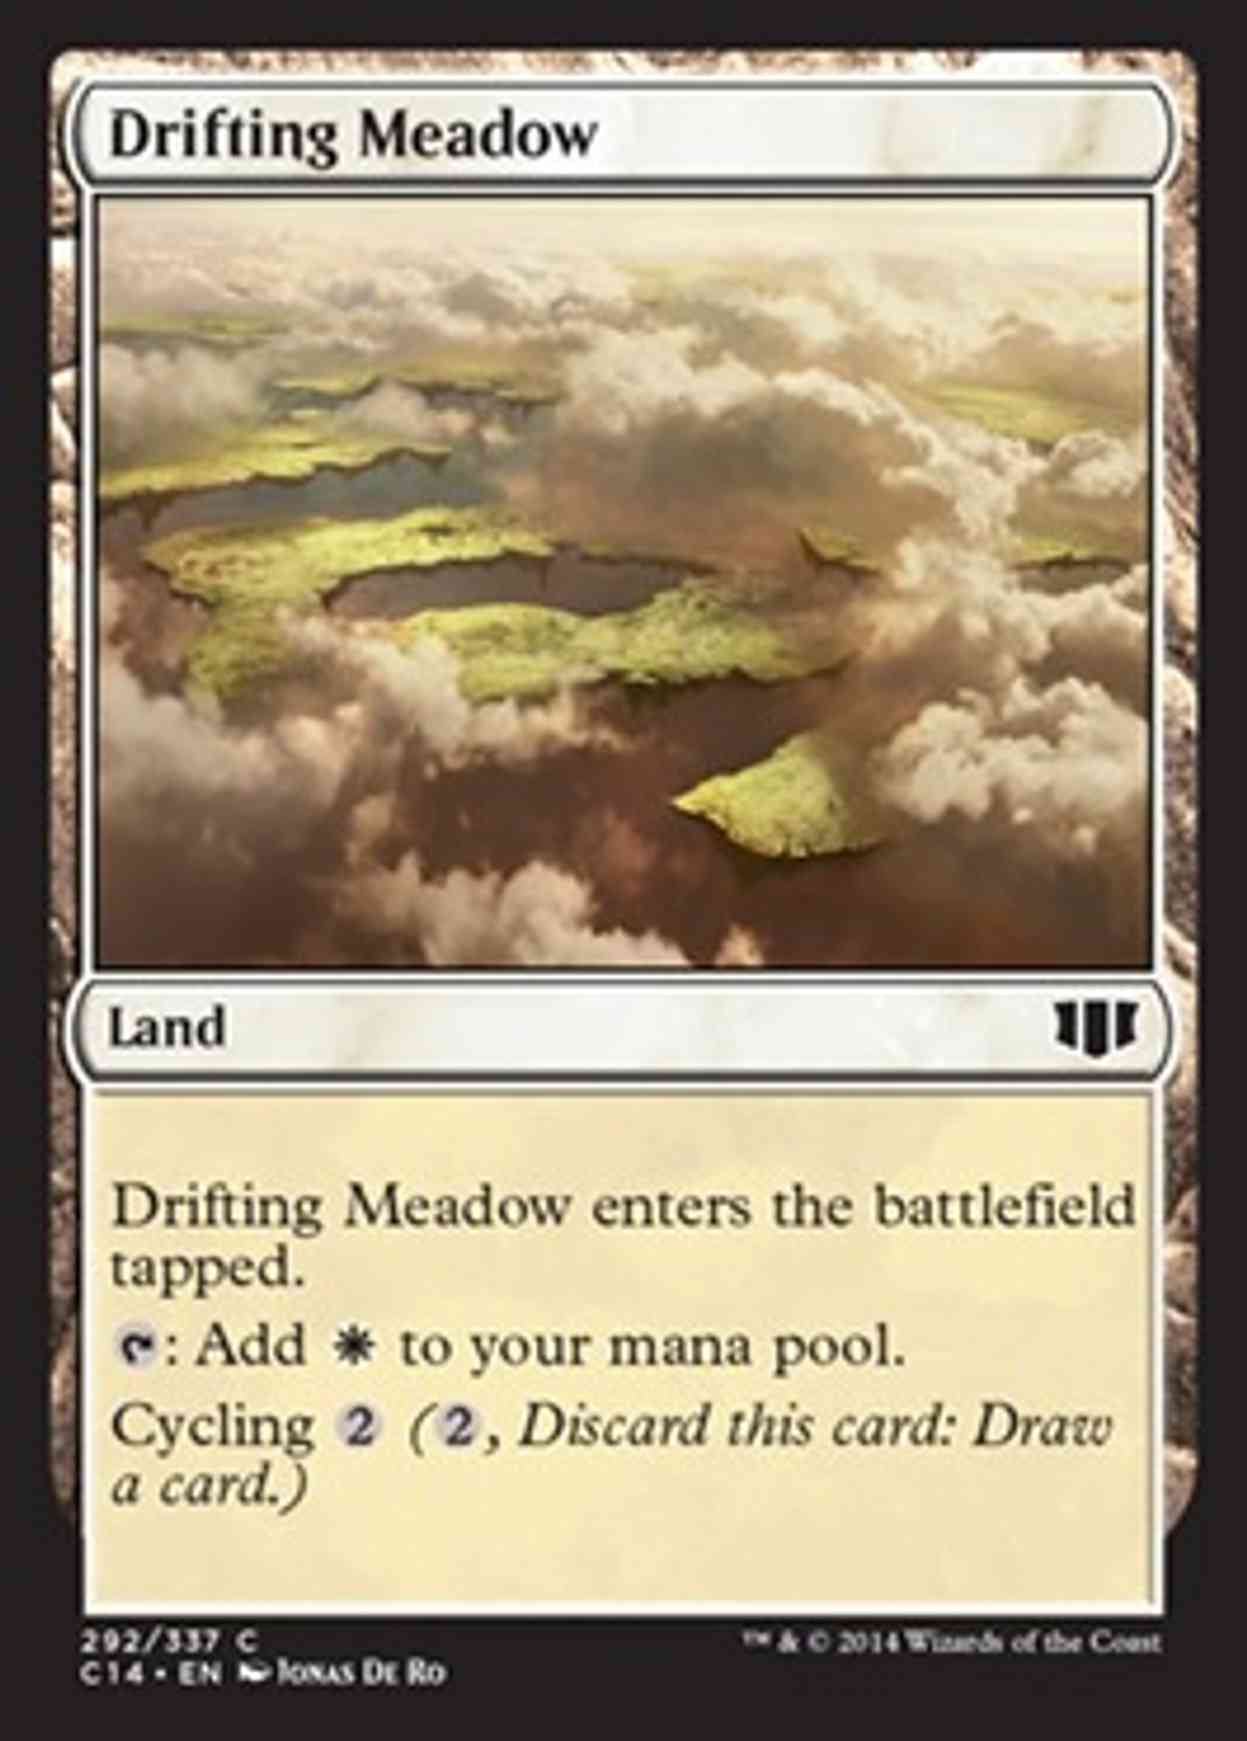 Drifting Meadow magic card front